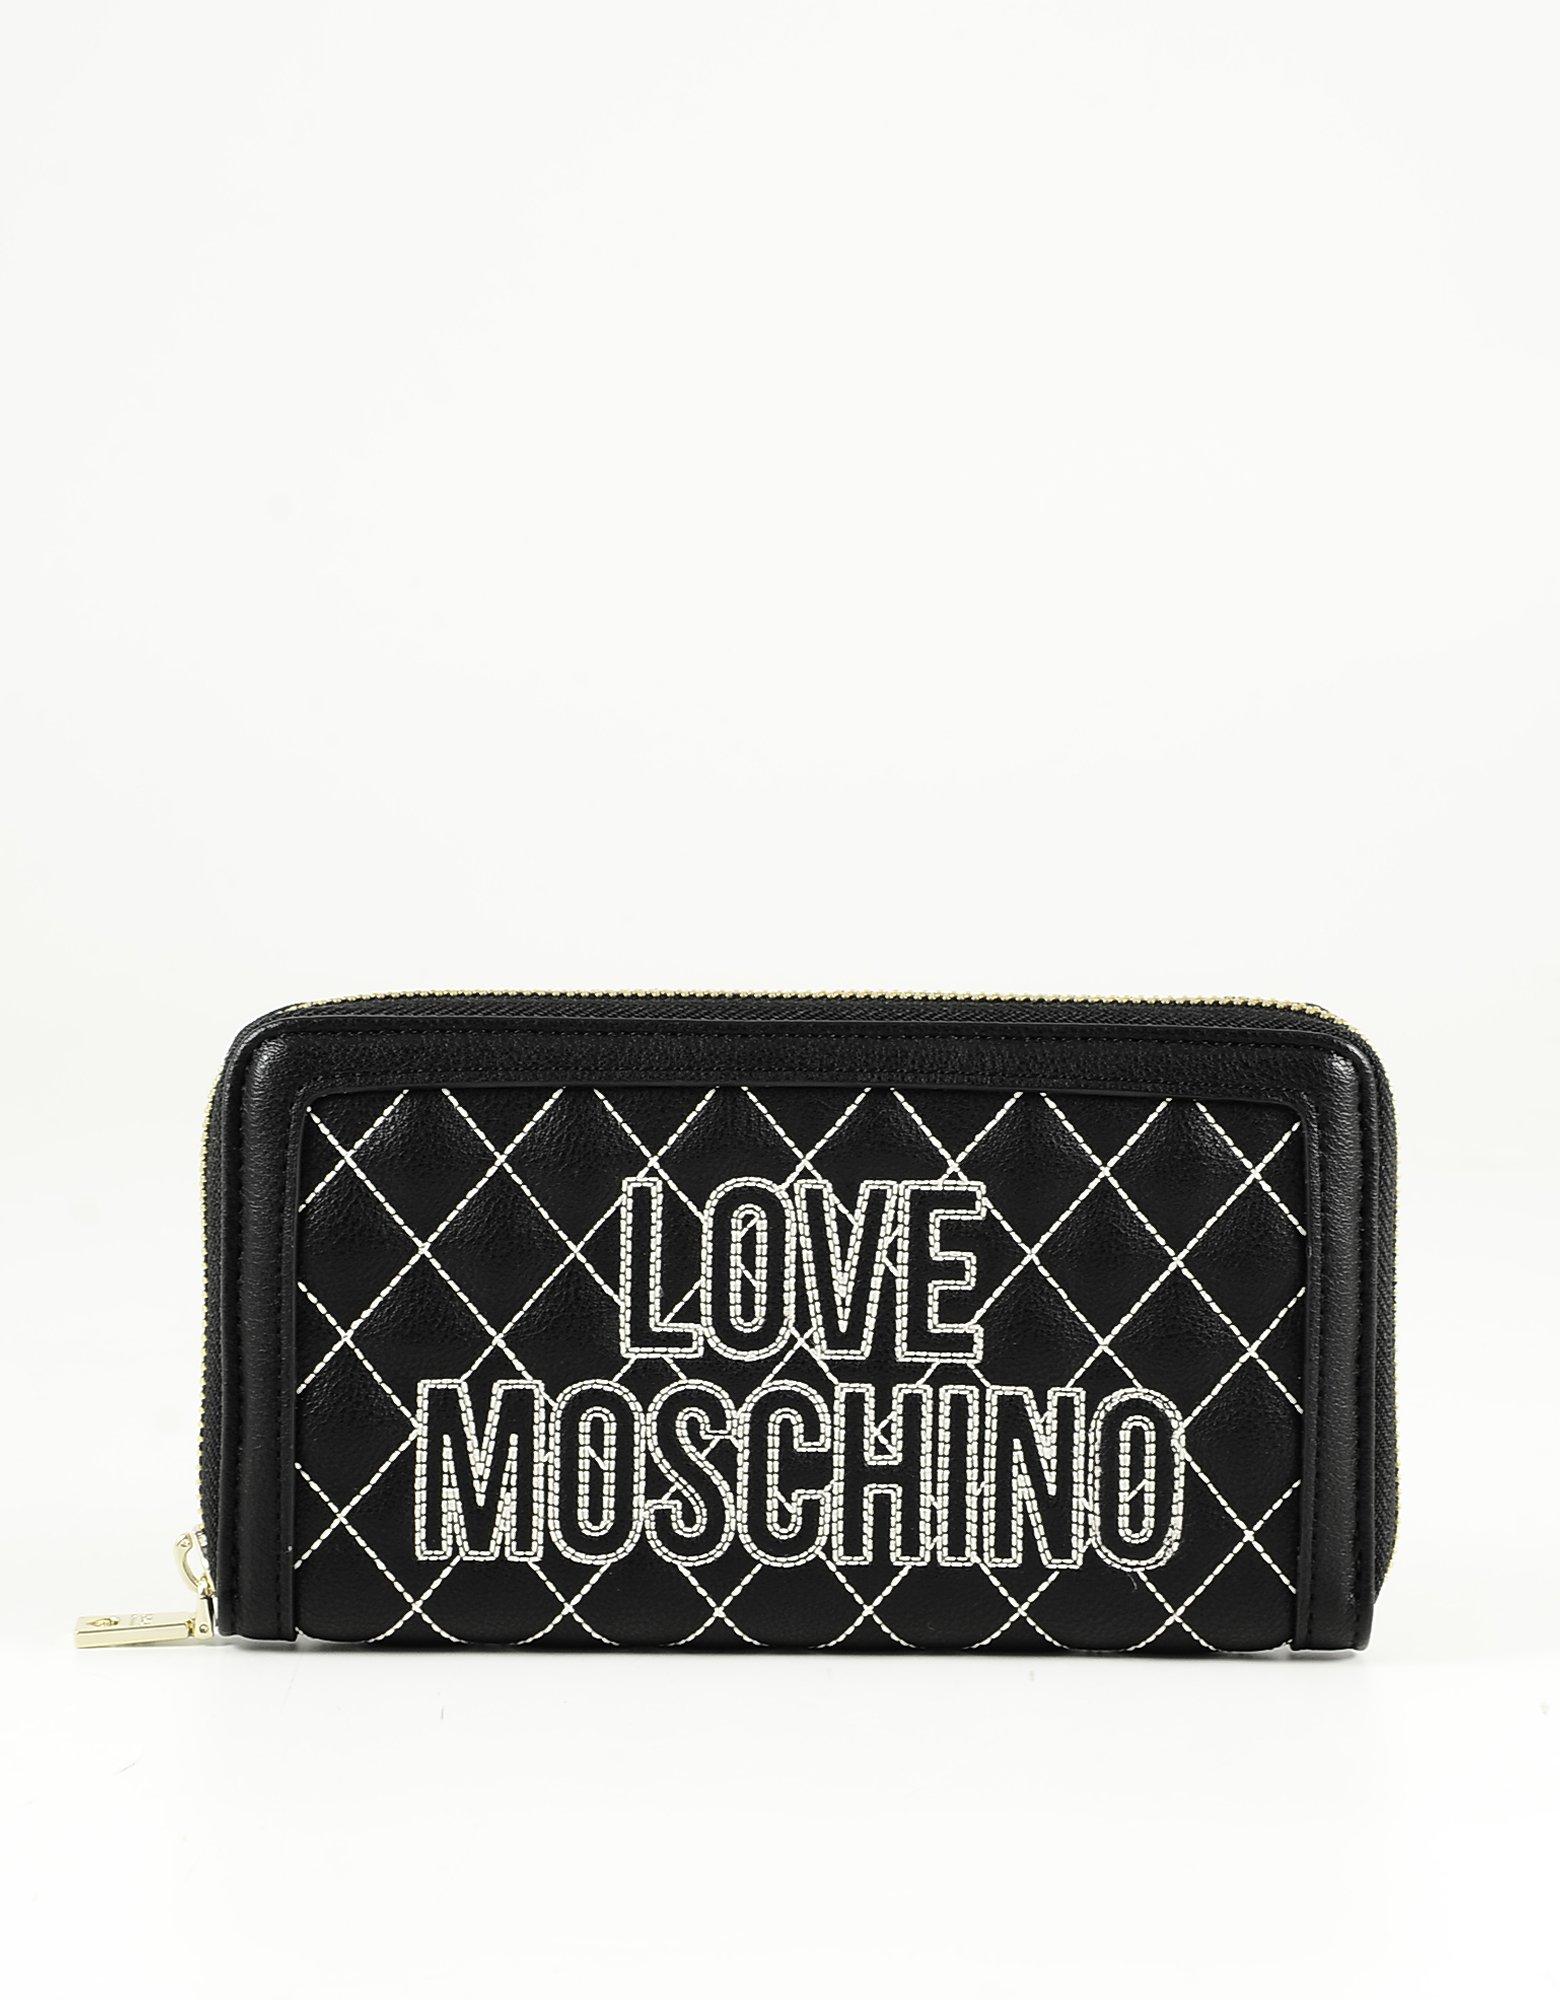 Love Moschino Women's Black Wallet at FORZIERI